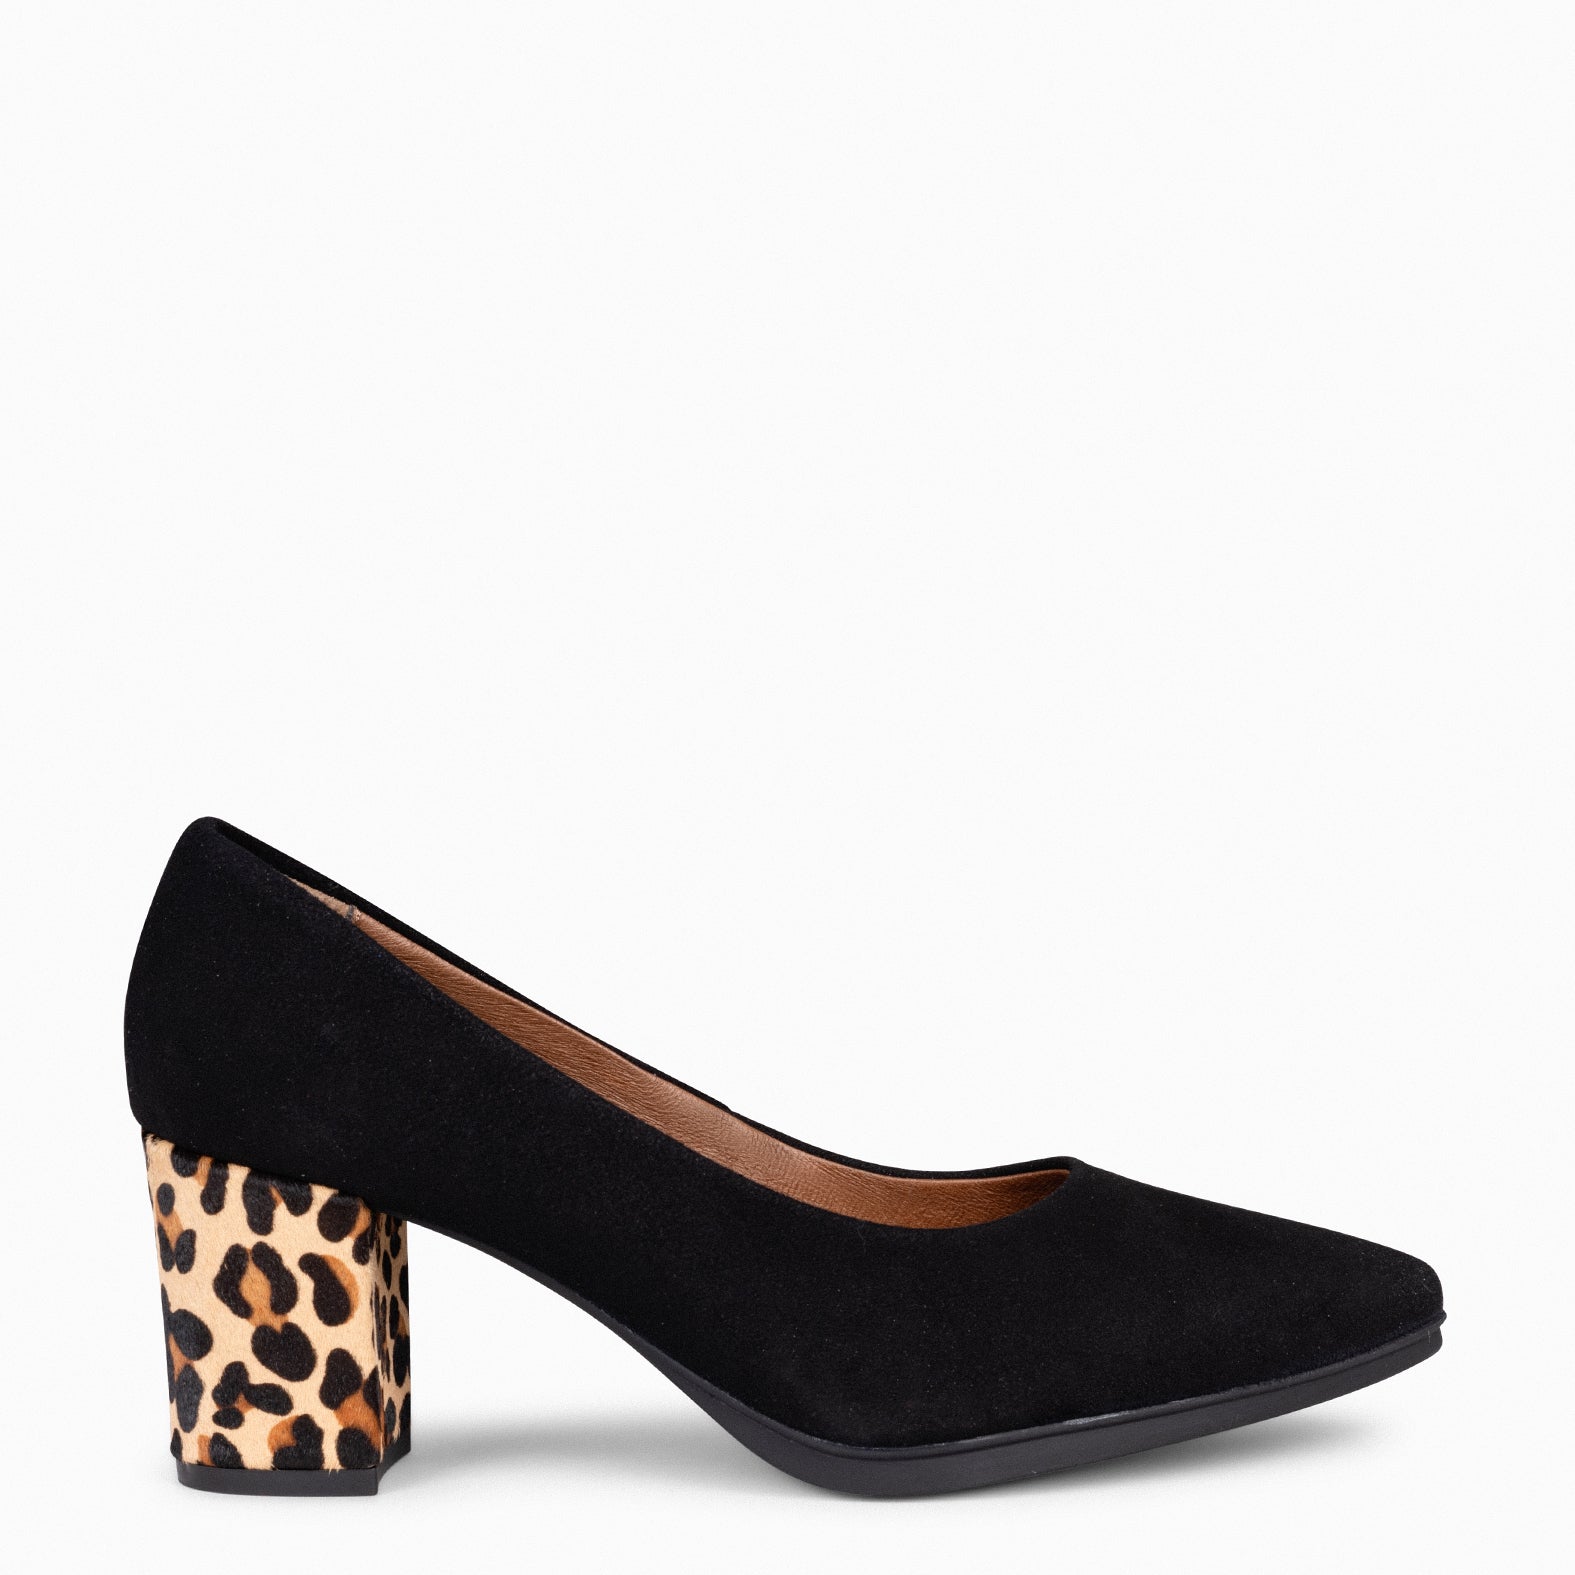 URBAN S WILD – LEOPARD animal print mid heels 